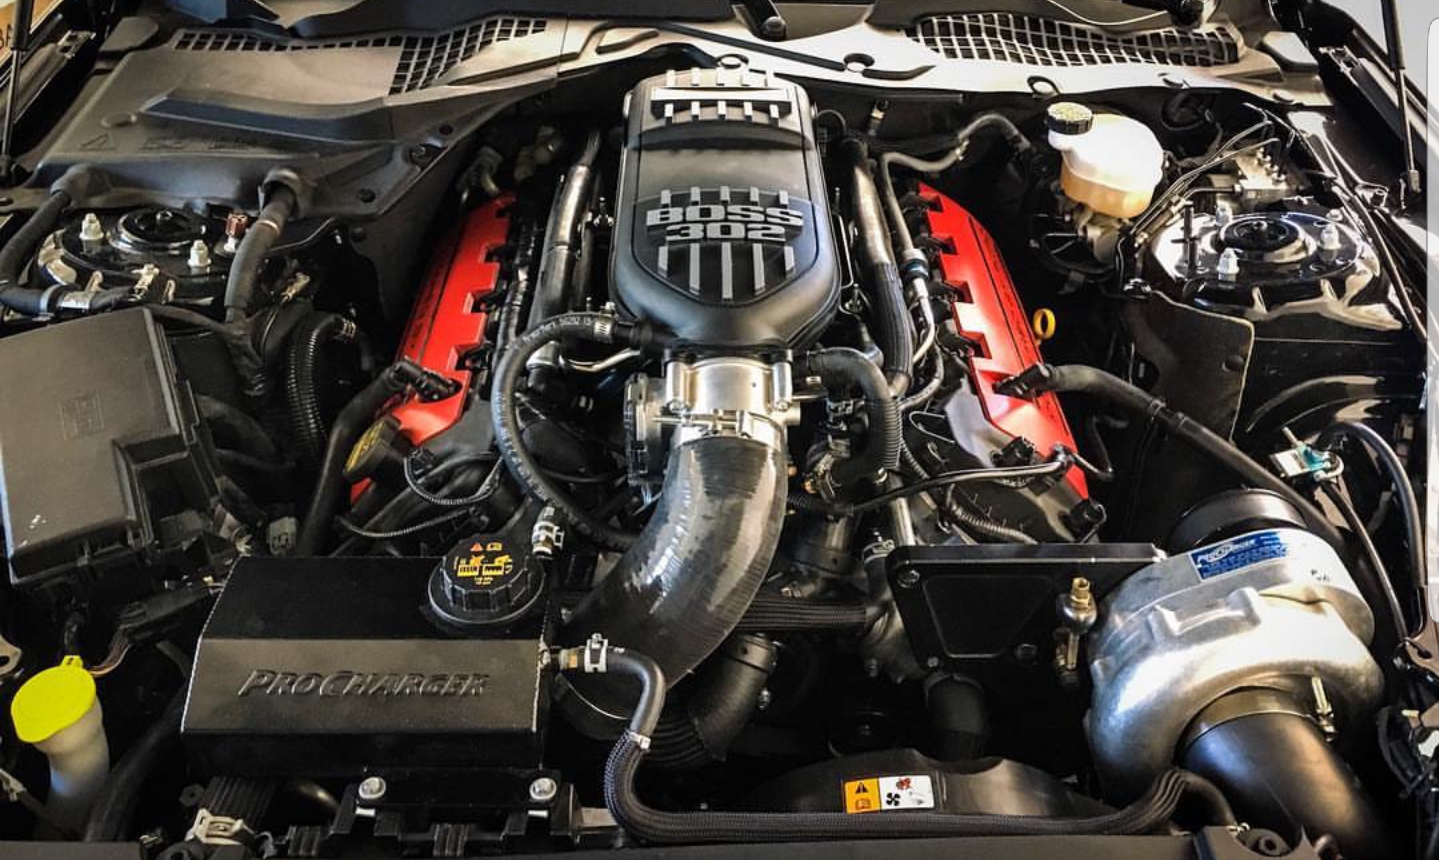 18 Intake Vs Boss Paxton Car 2015 S550 Mustang Forum Gt